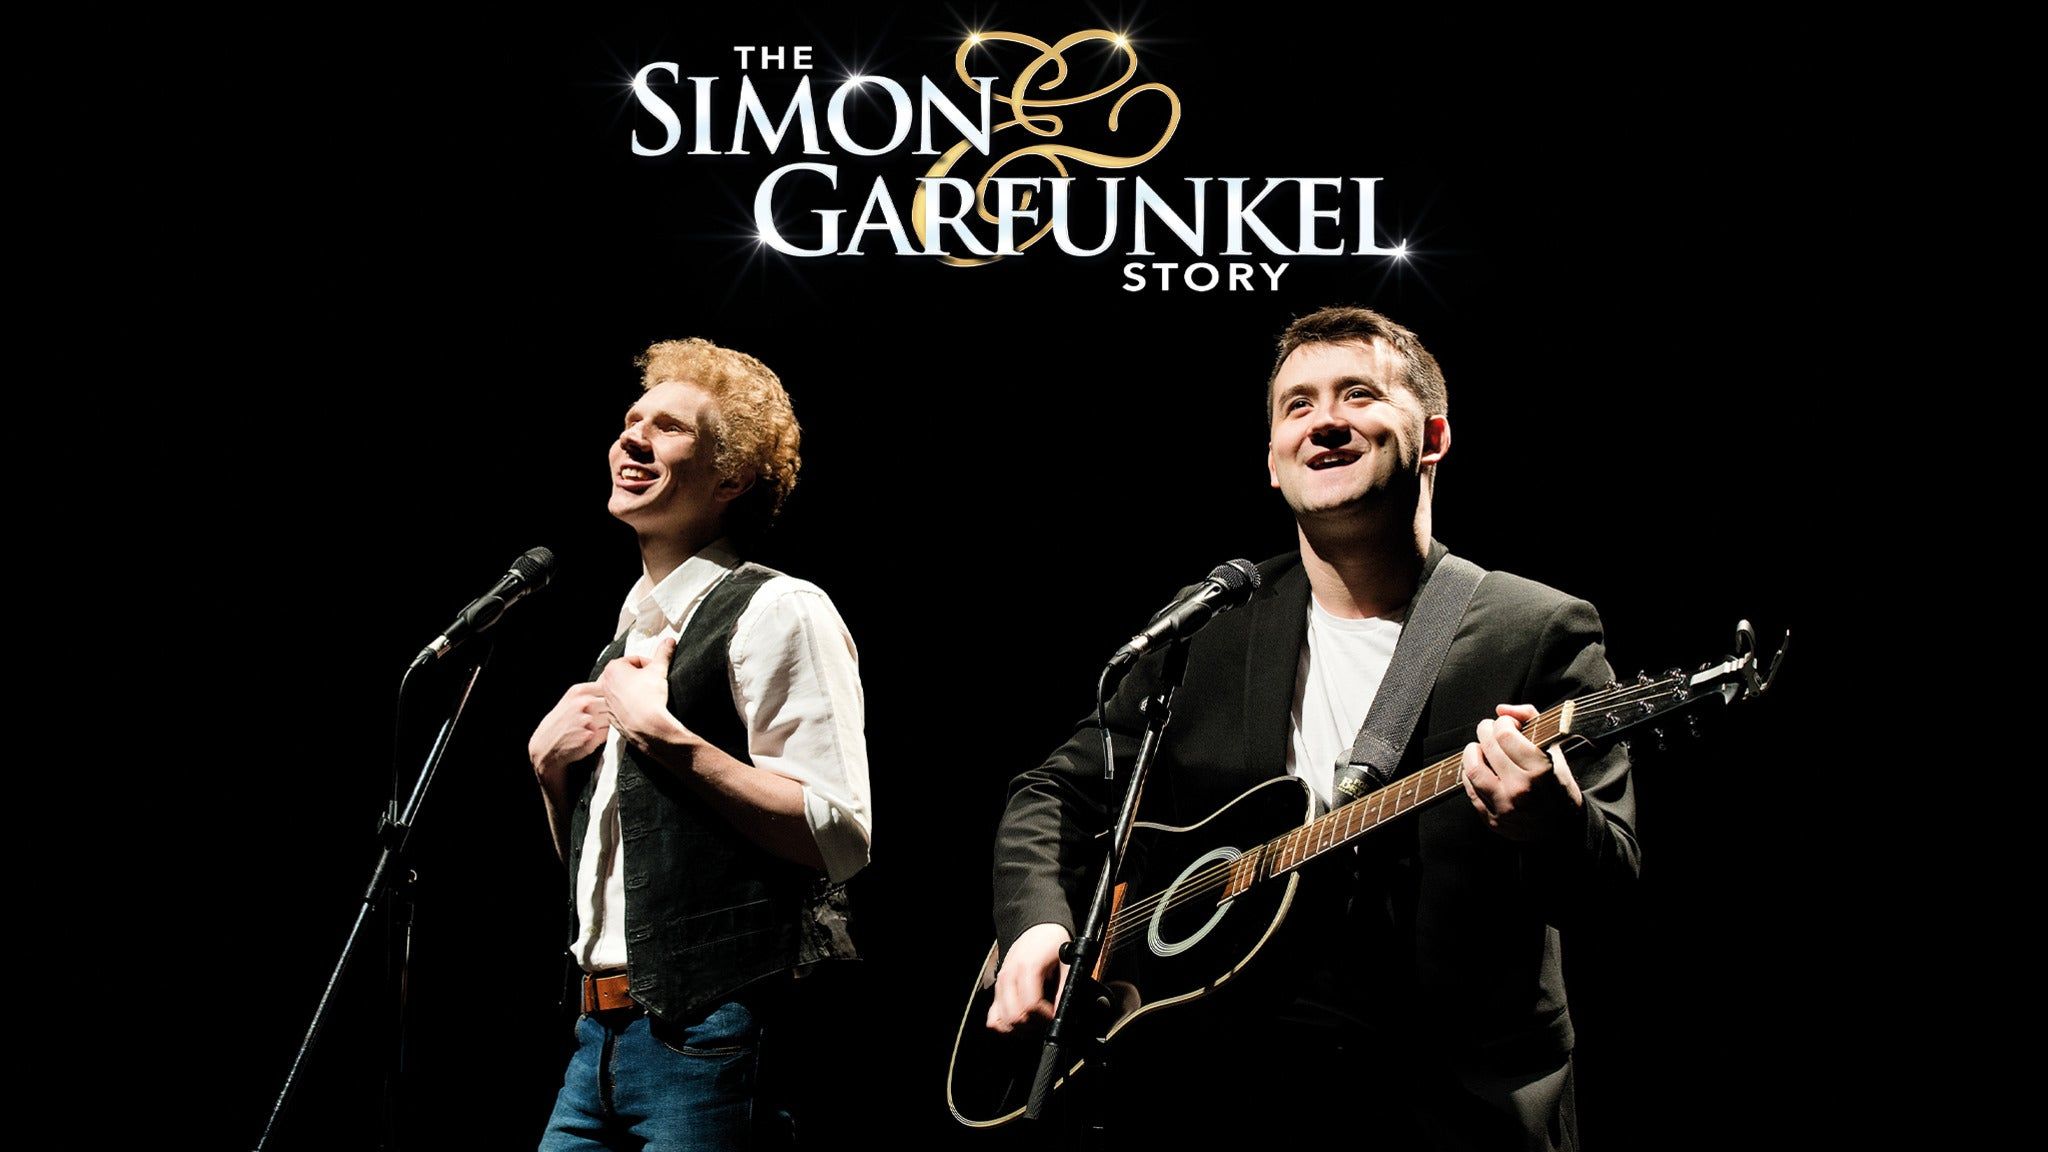 The Simon & Garfunkel Story Tickets, 2020 2021 Concert Tour Dates